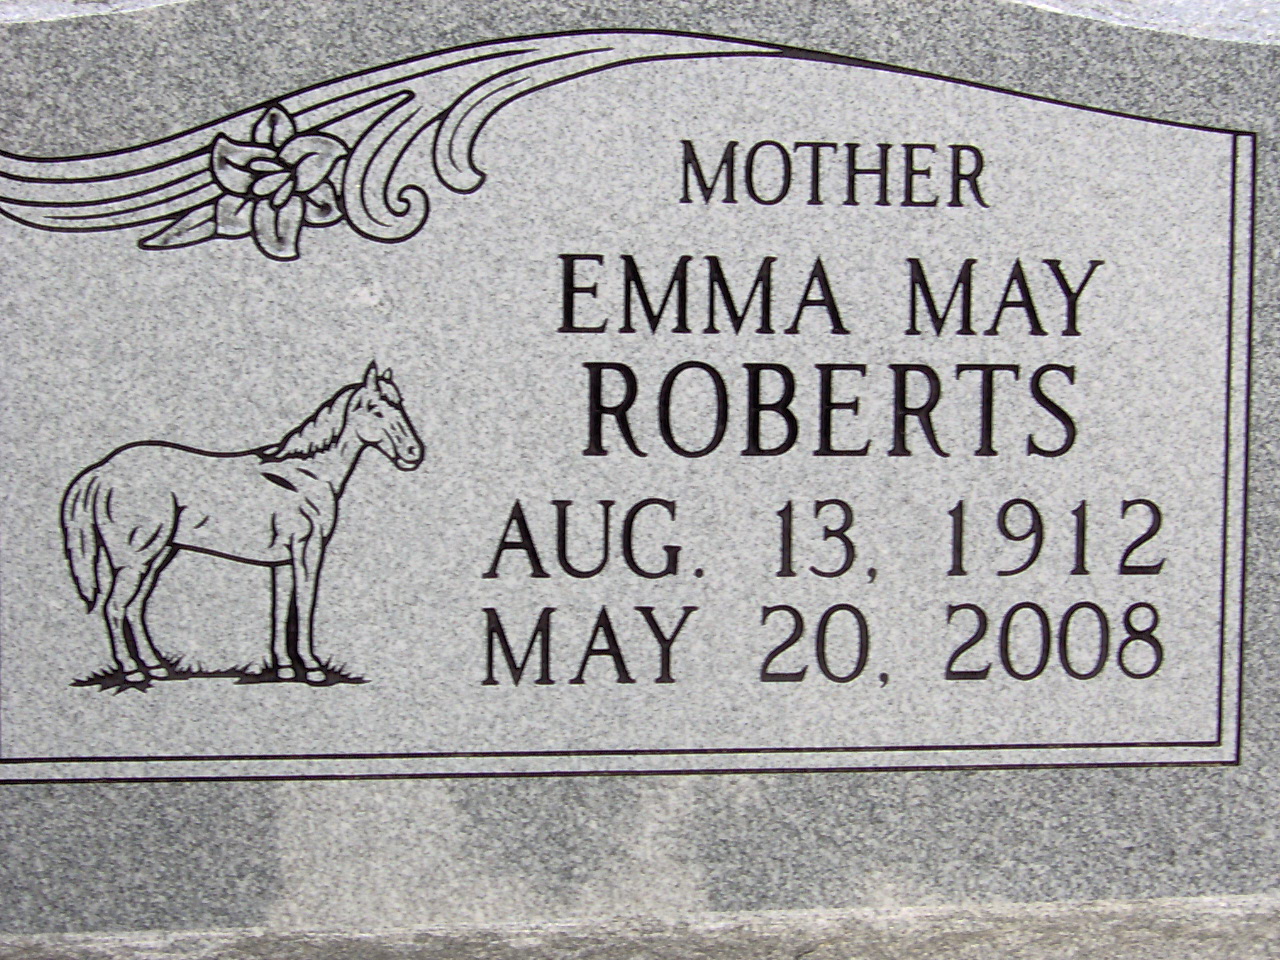 Headstone for Roberts, Emma Mae